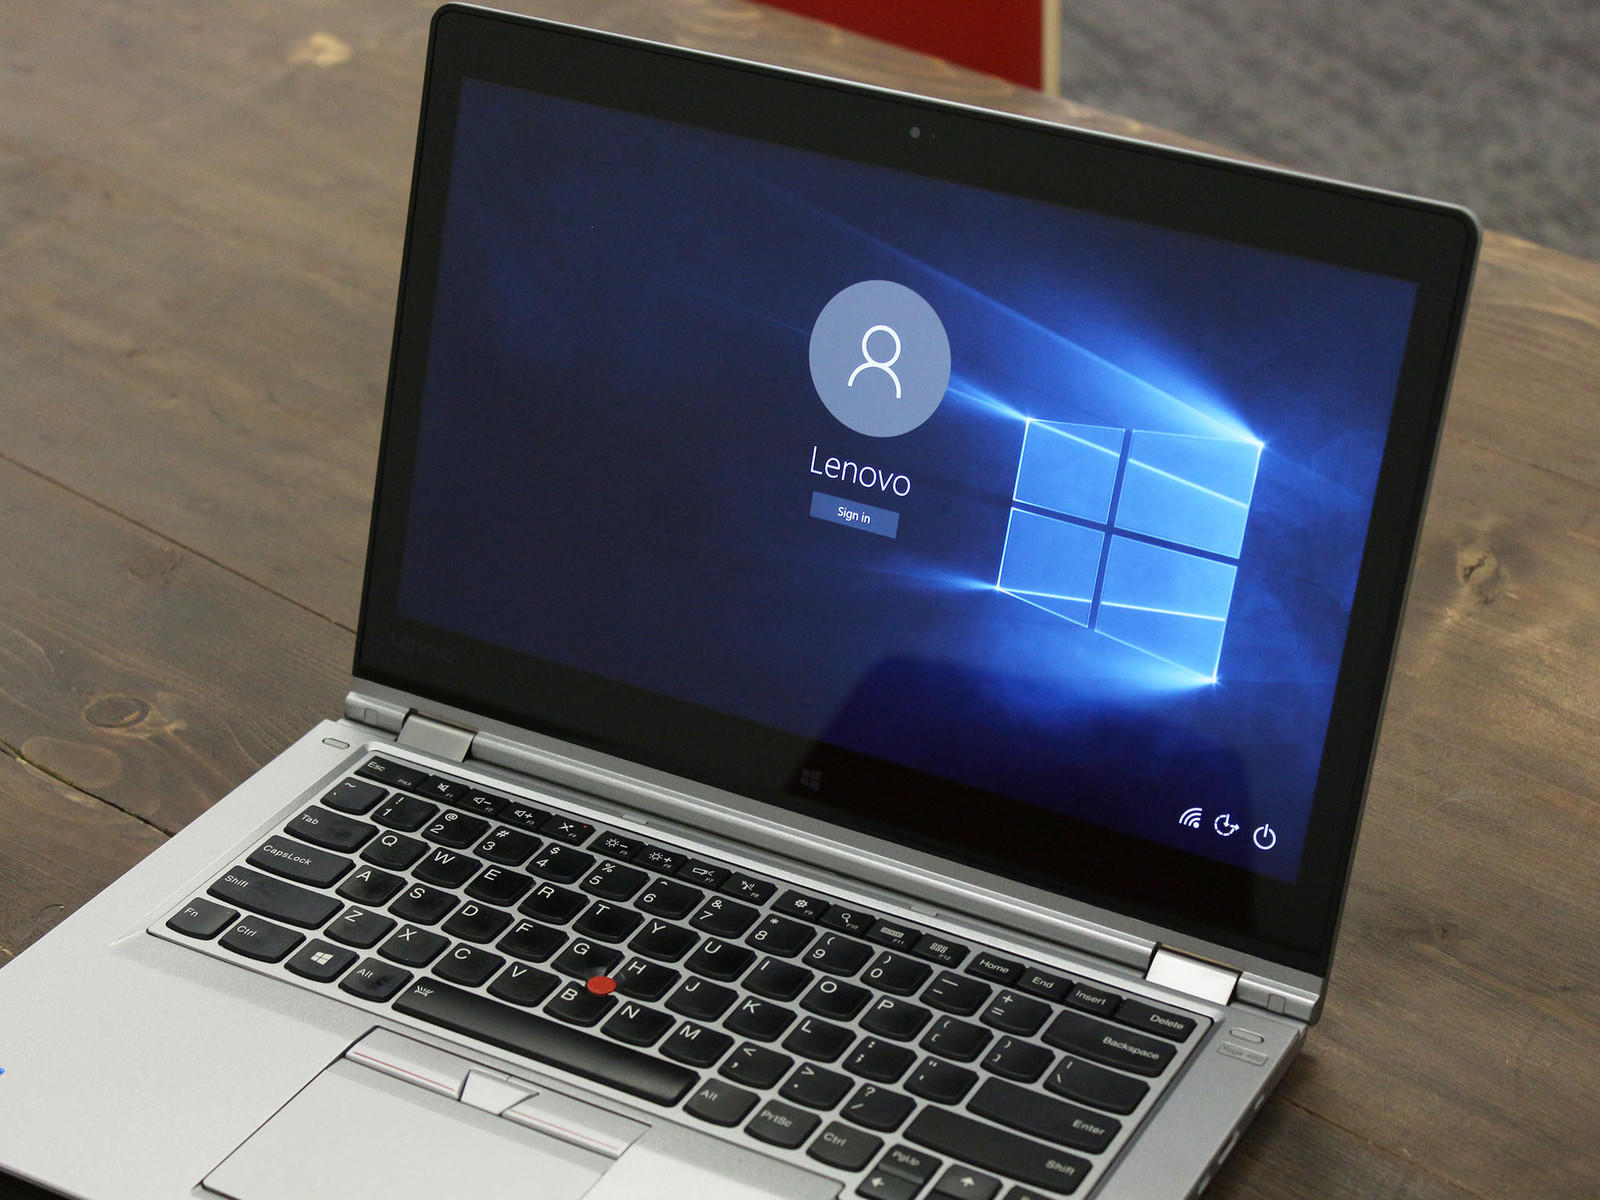 Top 3 Options to Reset Windows 10 Laptop Password